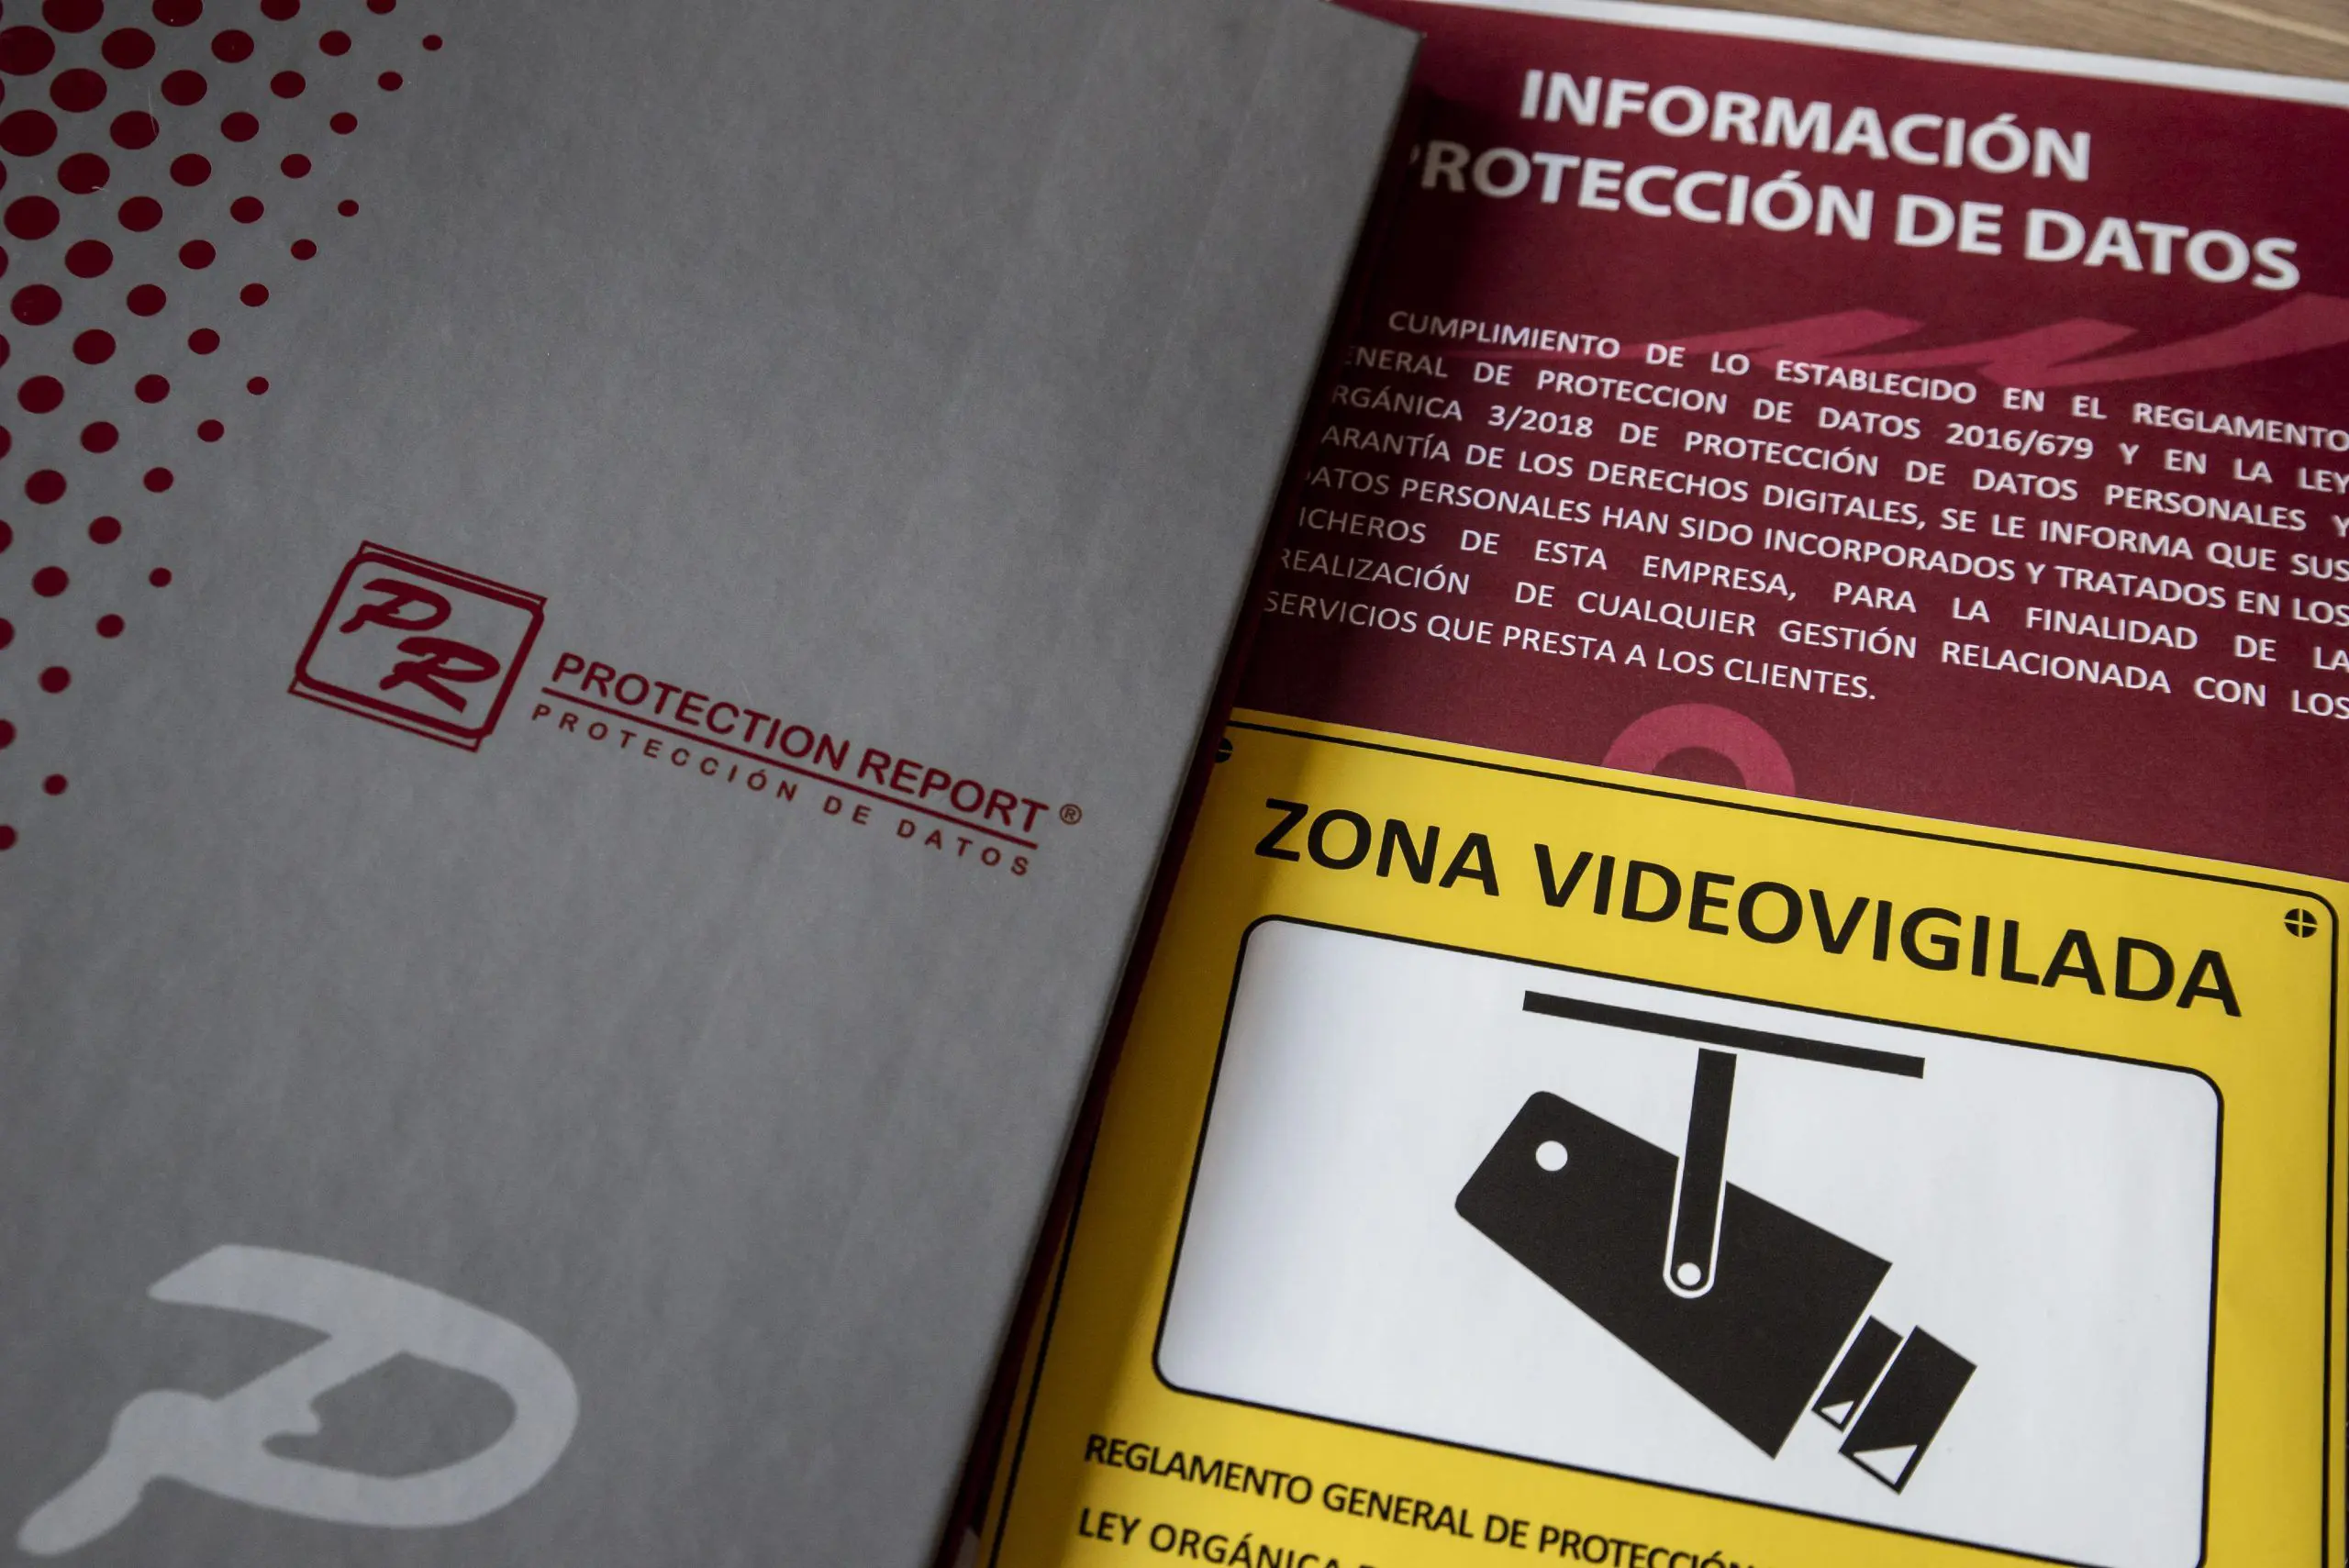 Cartel de Zona Videovigilada según Autoridad Catalana P.D.